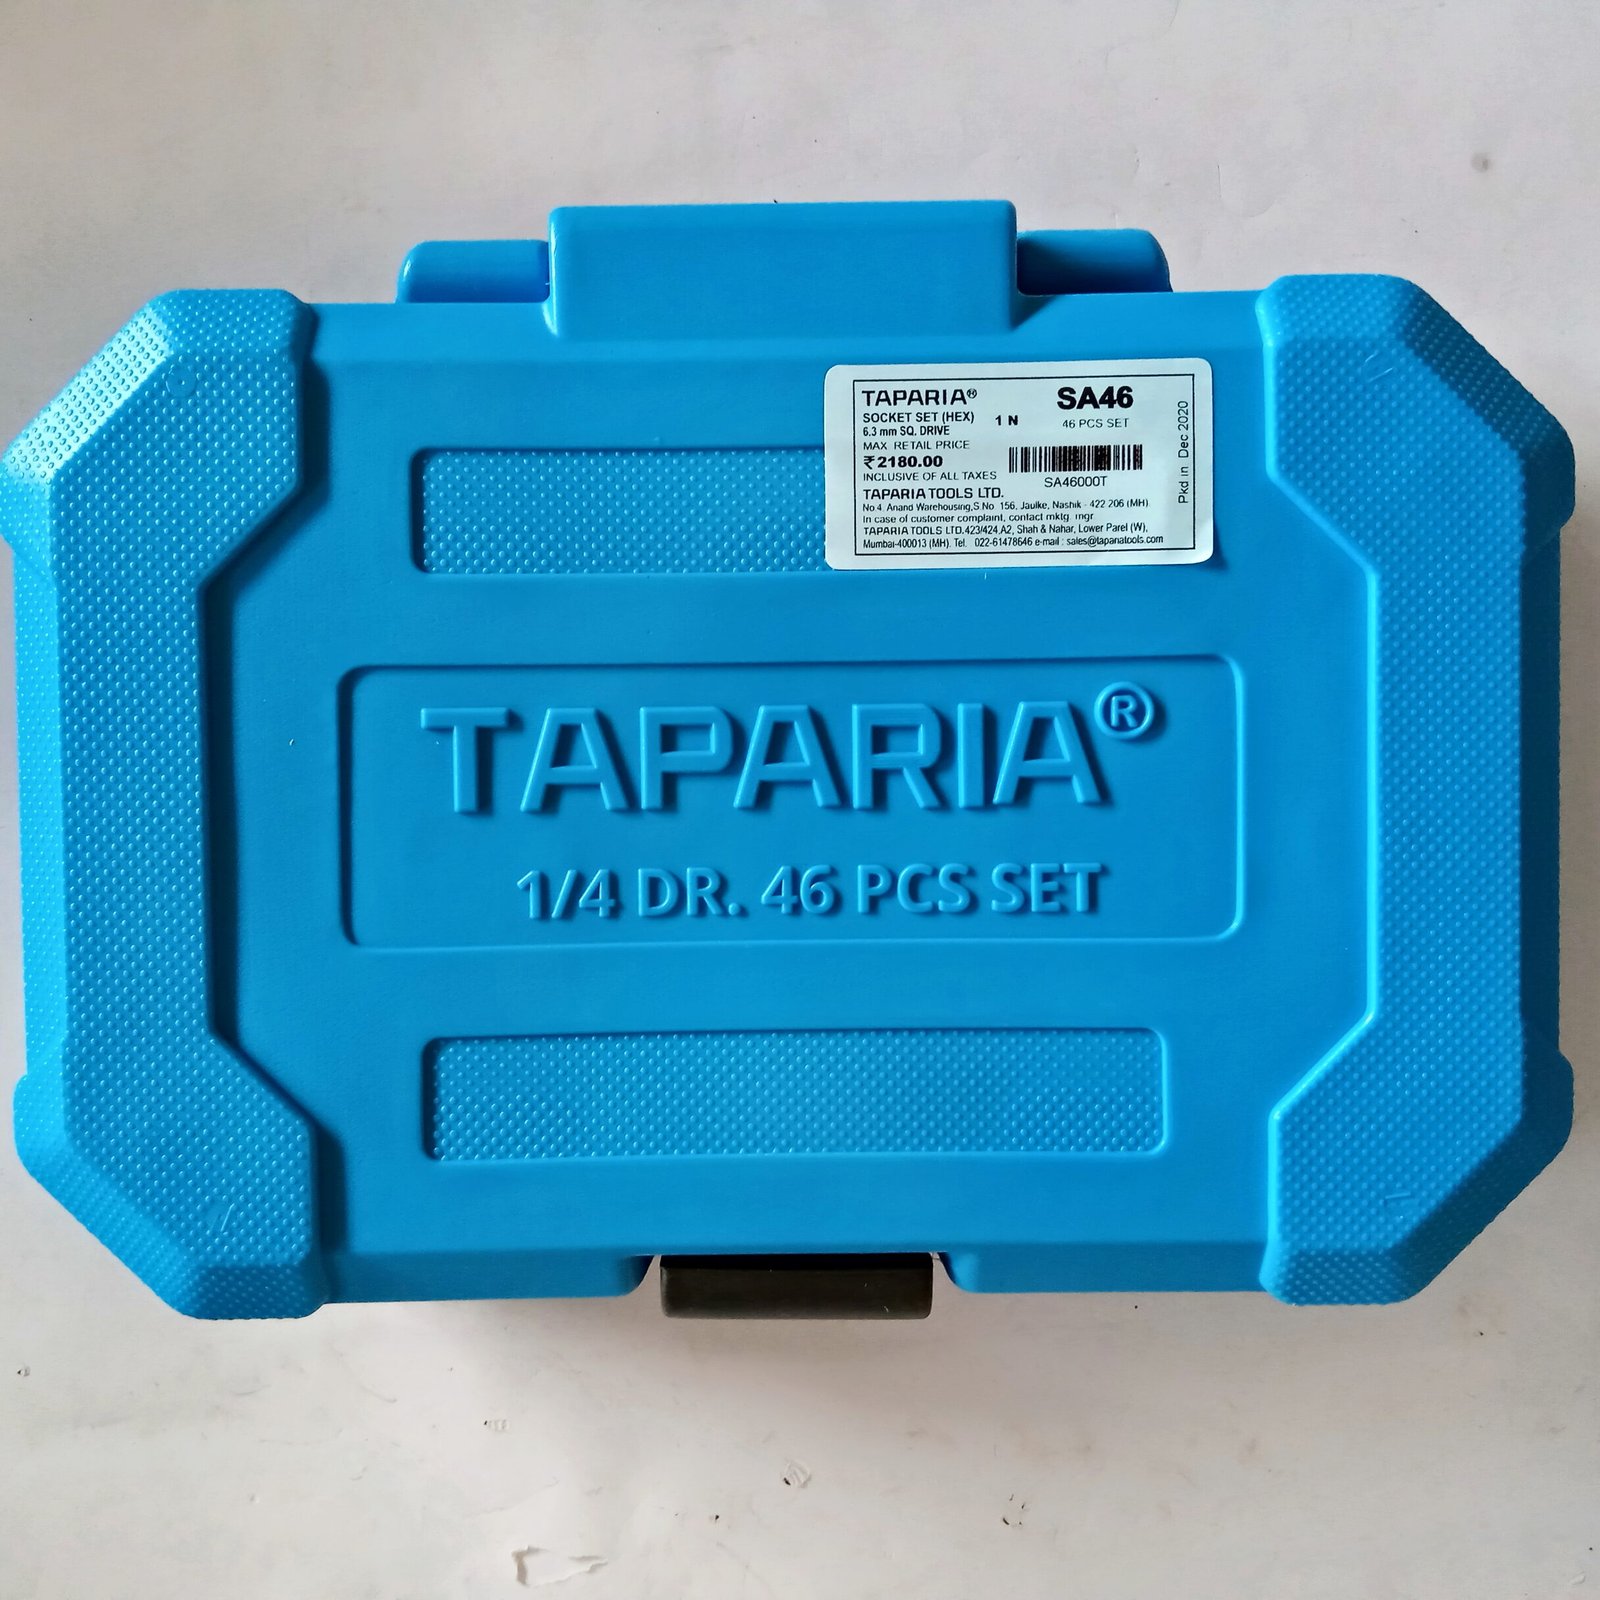 Taparia Tools Share Price: Latest Information